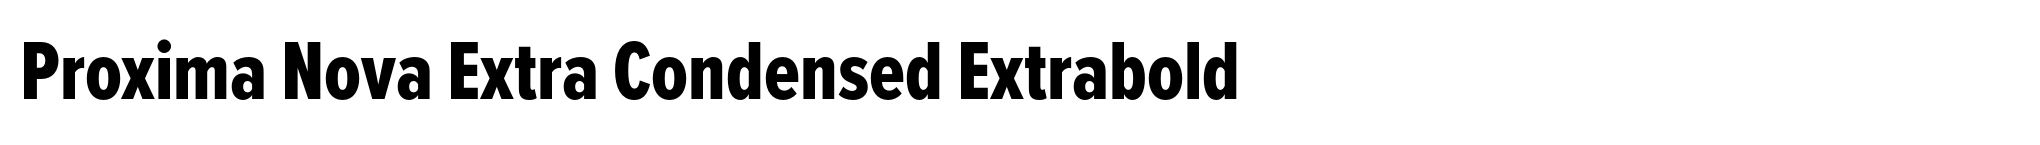 Proxima Nova Extra Condensed Extrabold image